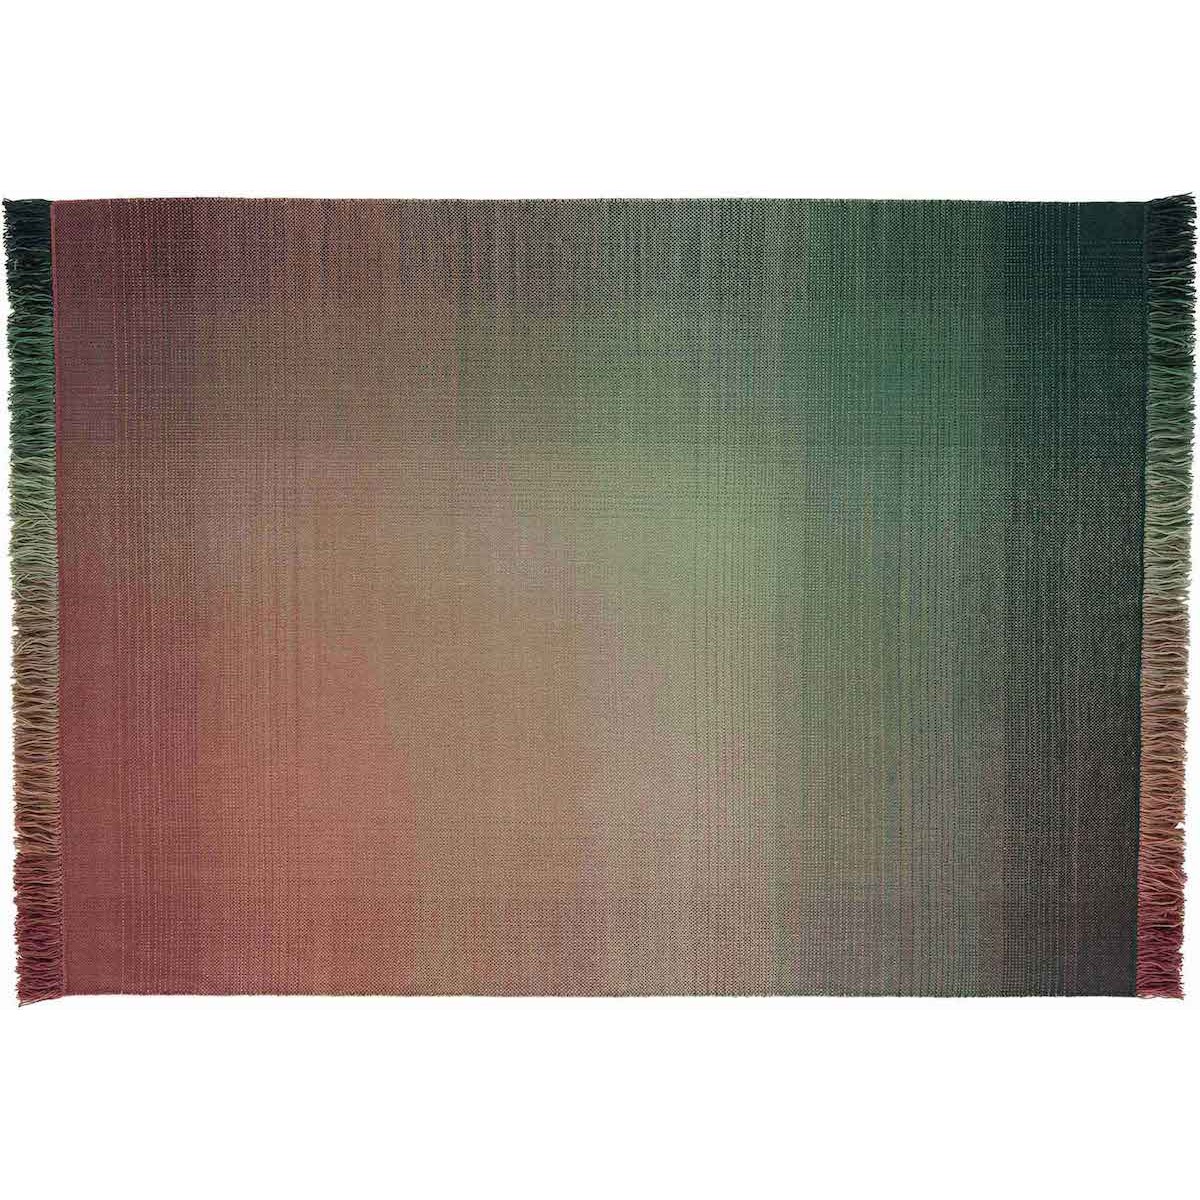 300x400cm - palette 3 - Shade rug